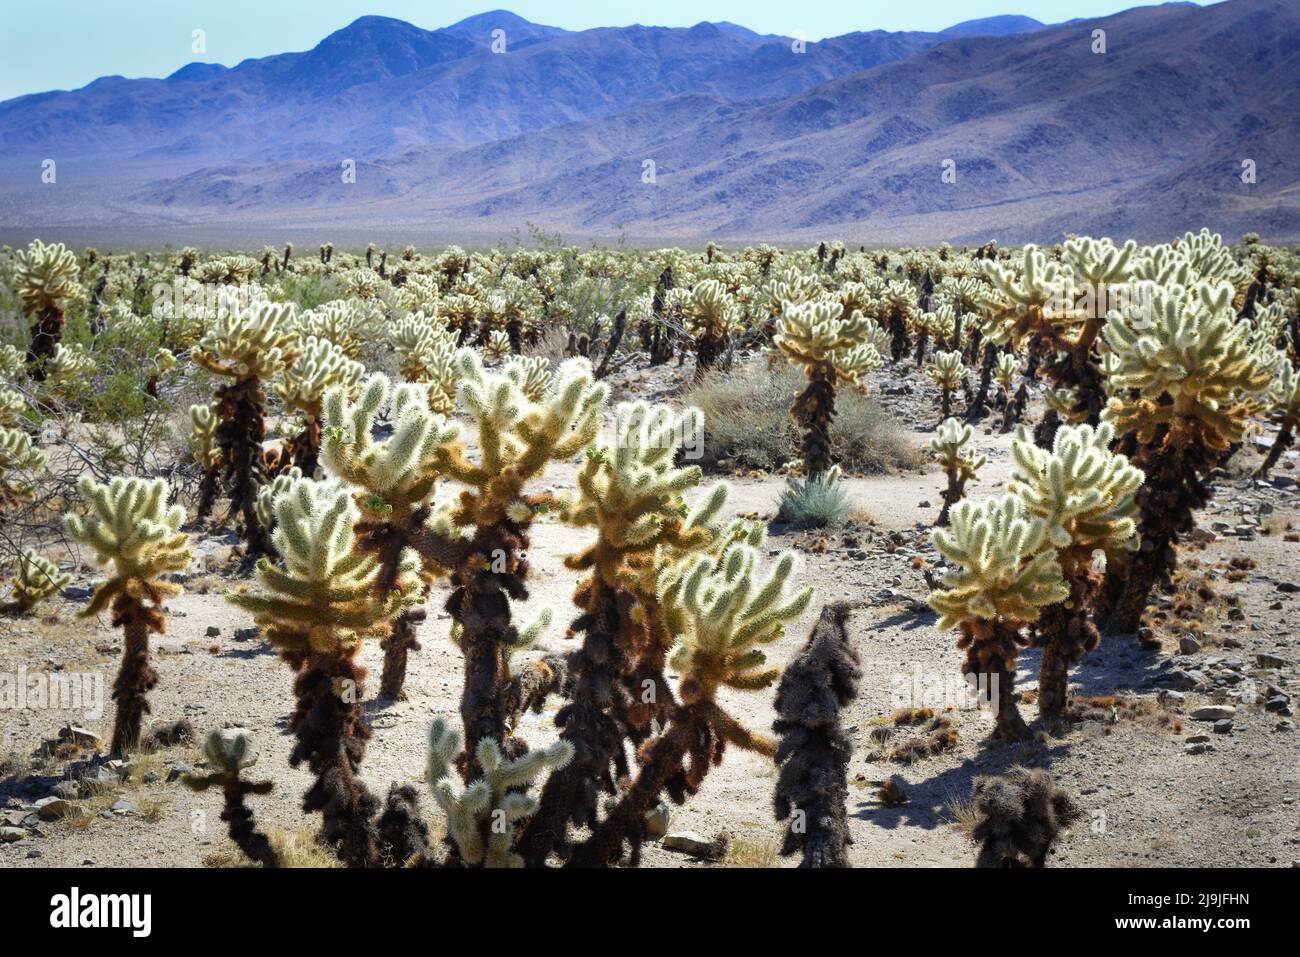 The unique Cholla cactus garden in Joshua tree National Park in the Mojave desert, CA Stock Photo